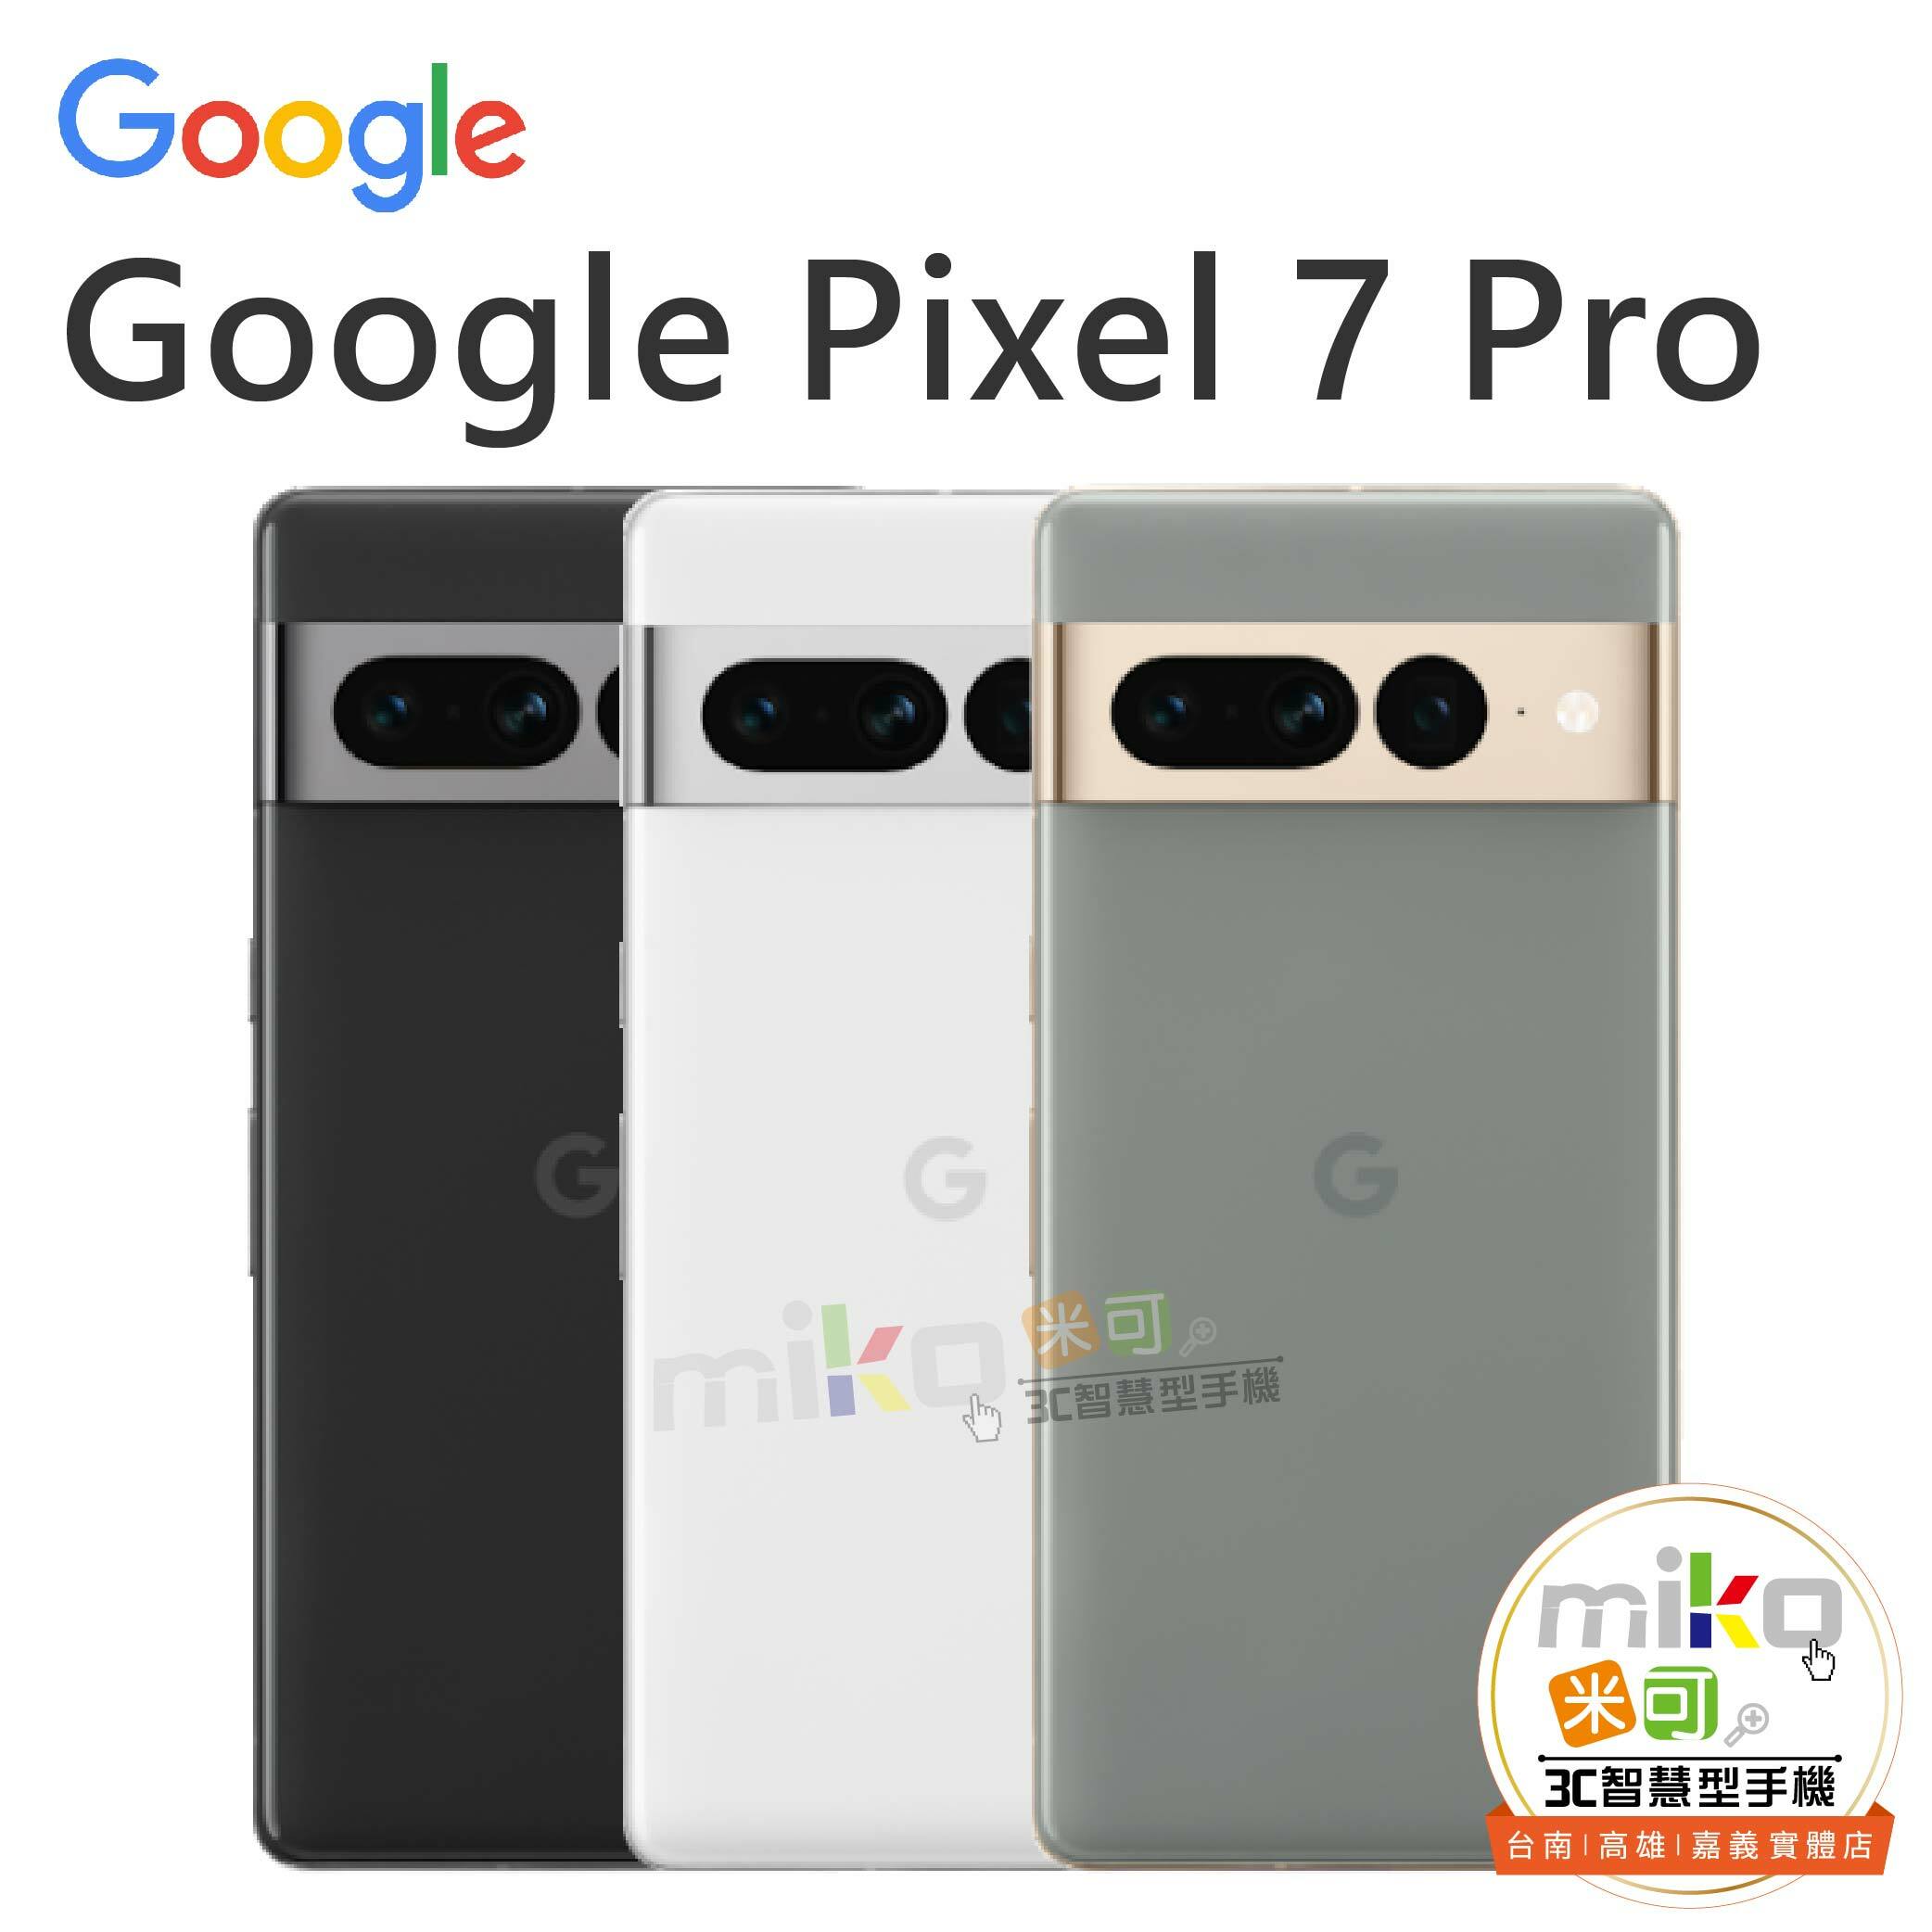 Google Pixel 7 Pro 5G手機優惠價- 台北/台南/高雄/嘉義miko米可手機館